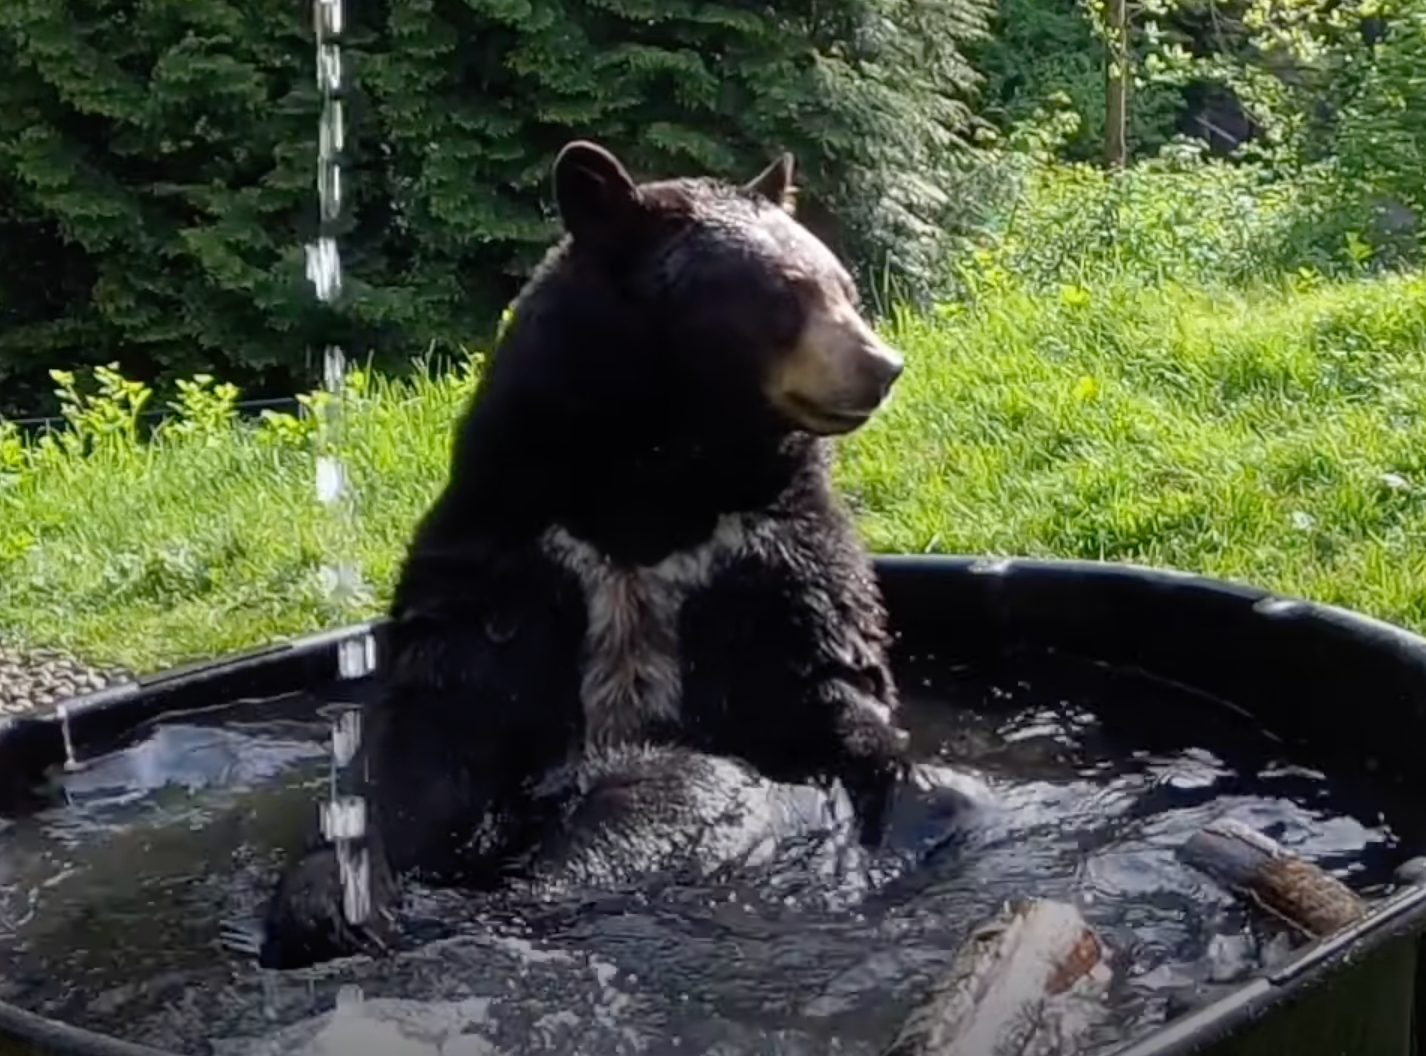 Zoo mourns unexpected loss of black bear Takoda